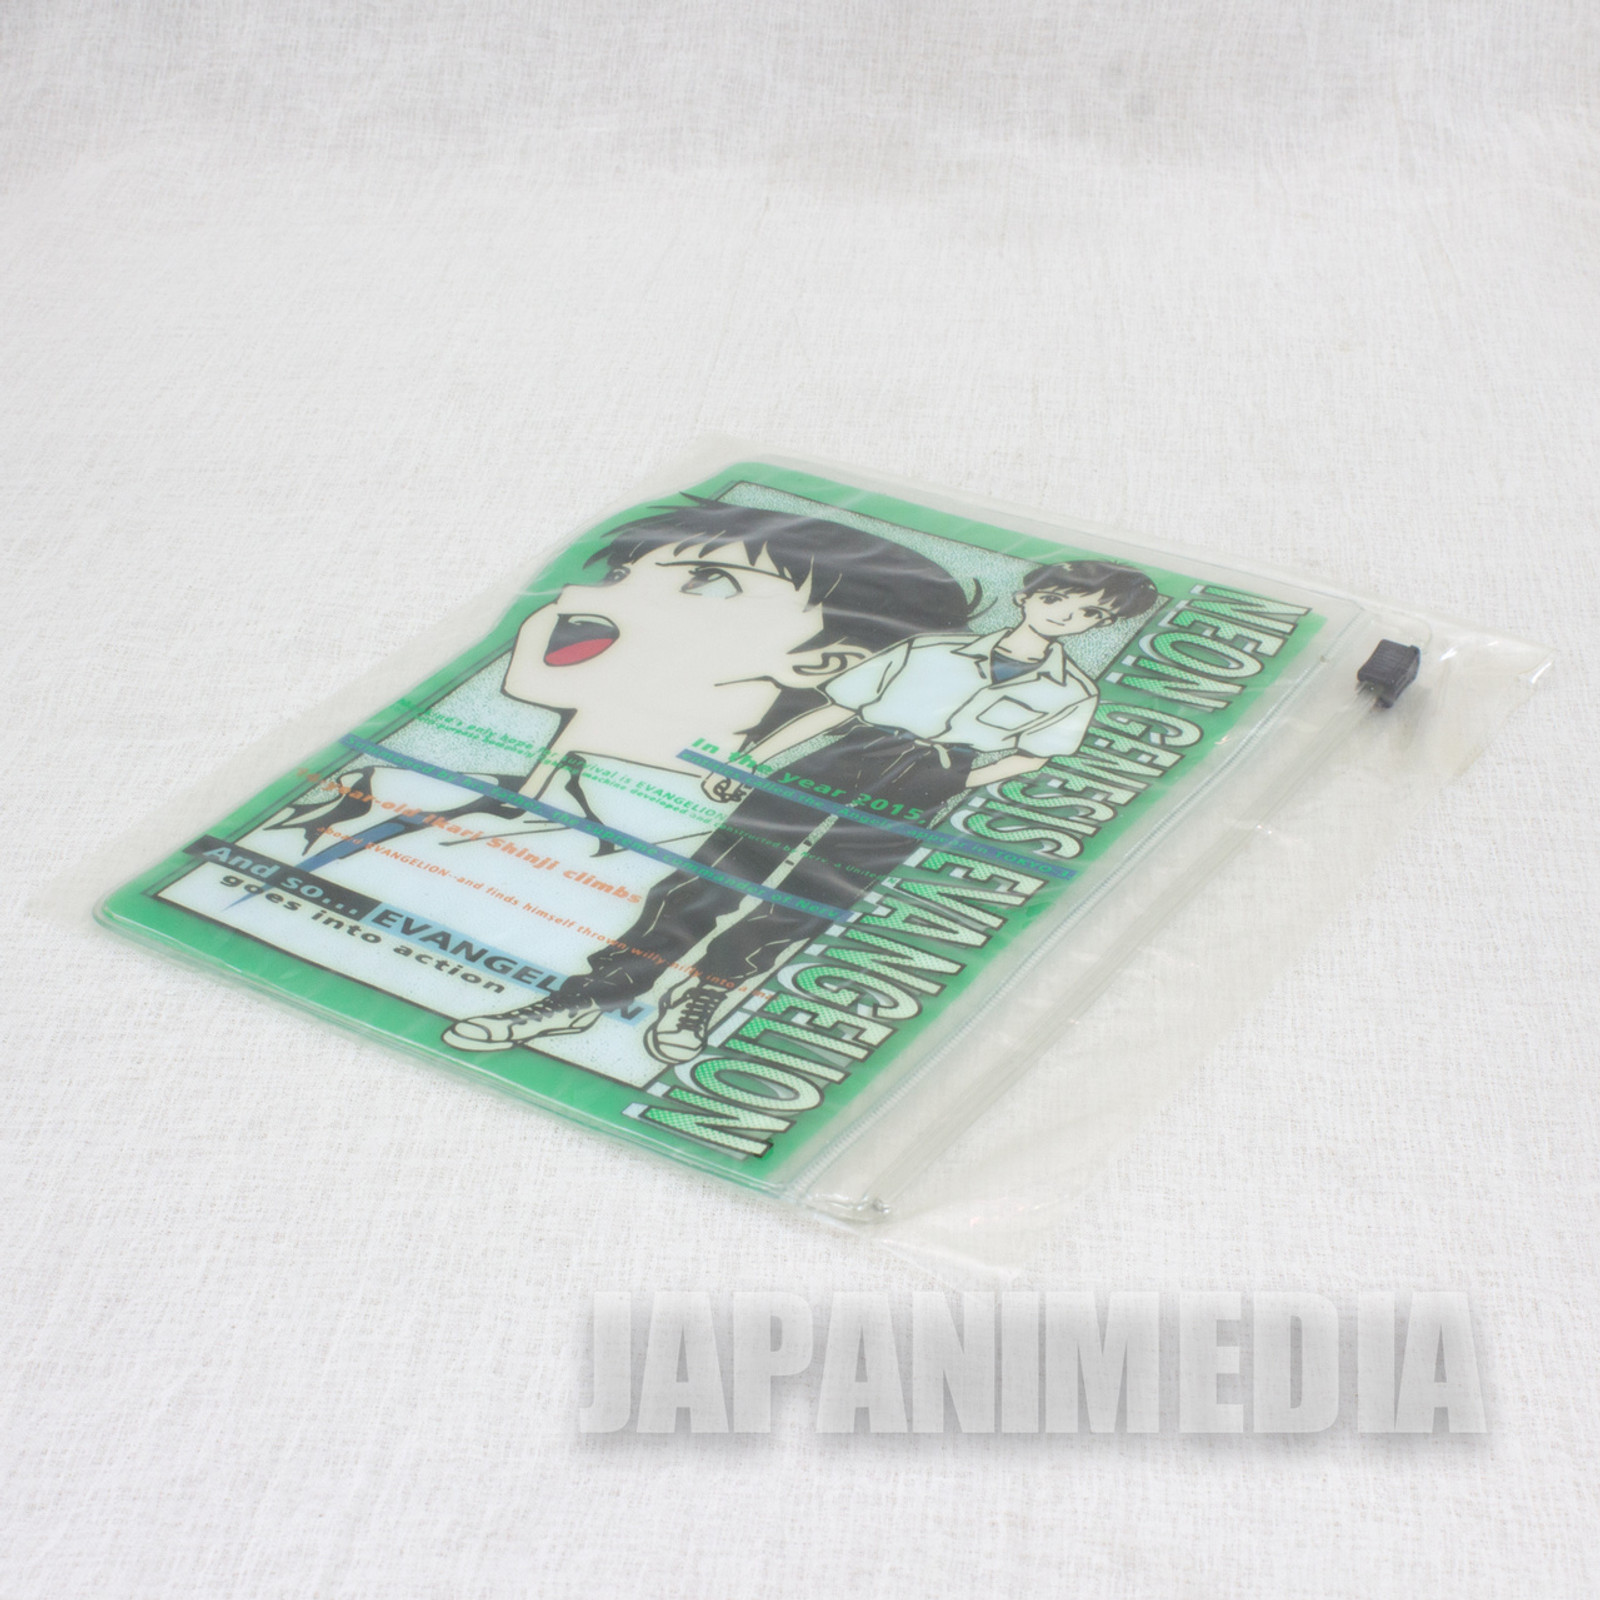 Retro RARE Evangelion Shinji Ikari Mini Clear pouch Bag JAPAN ANIME